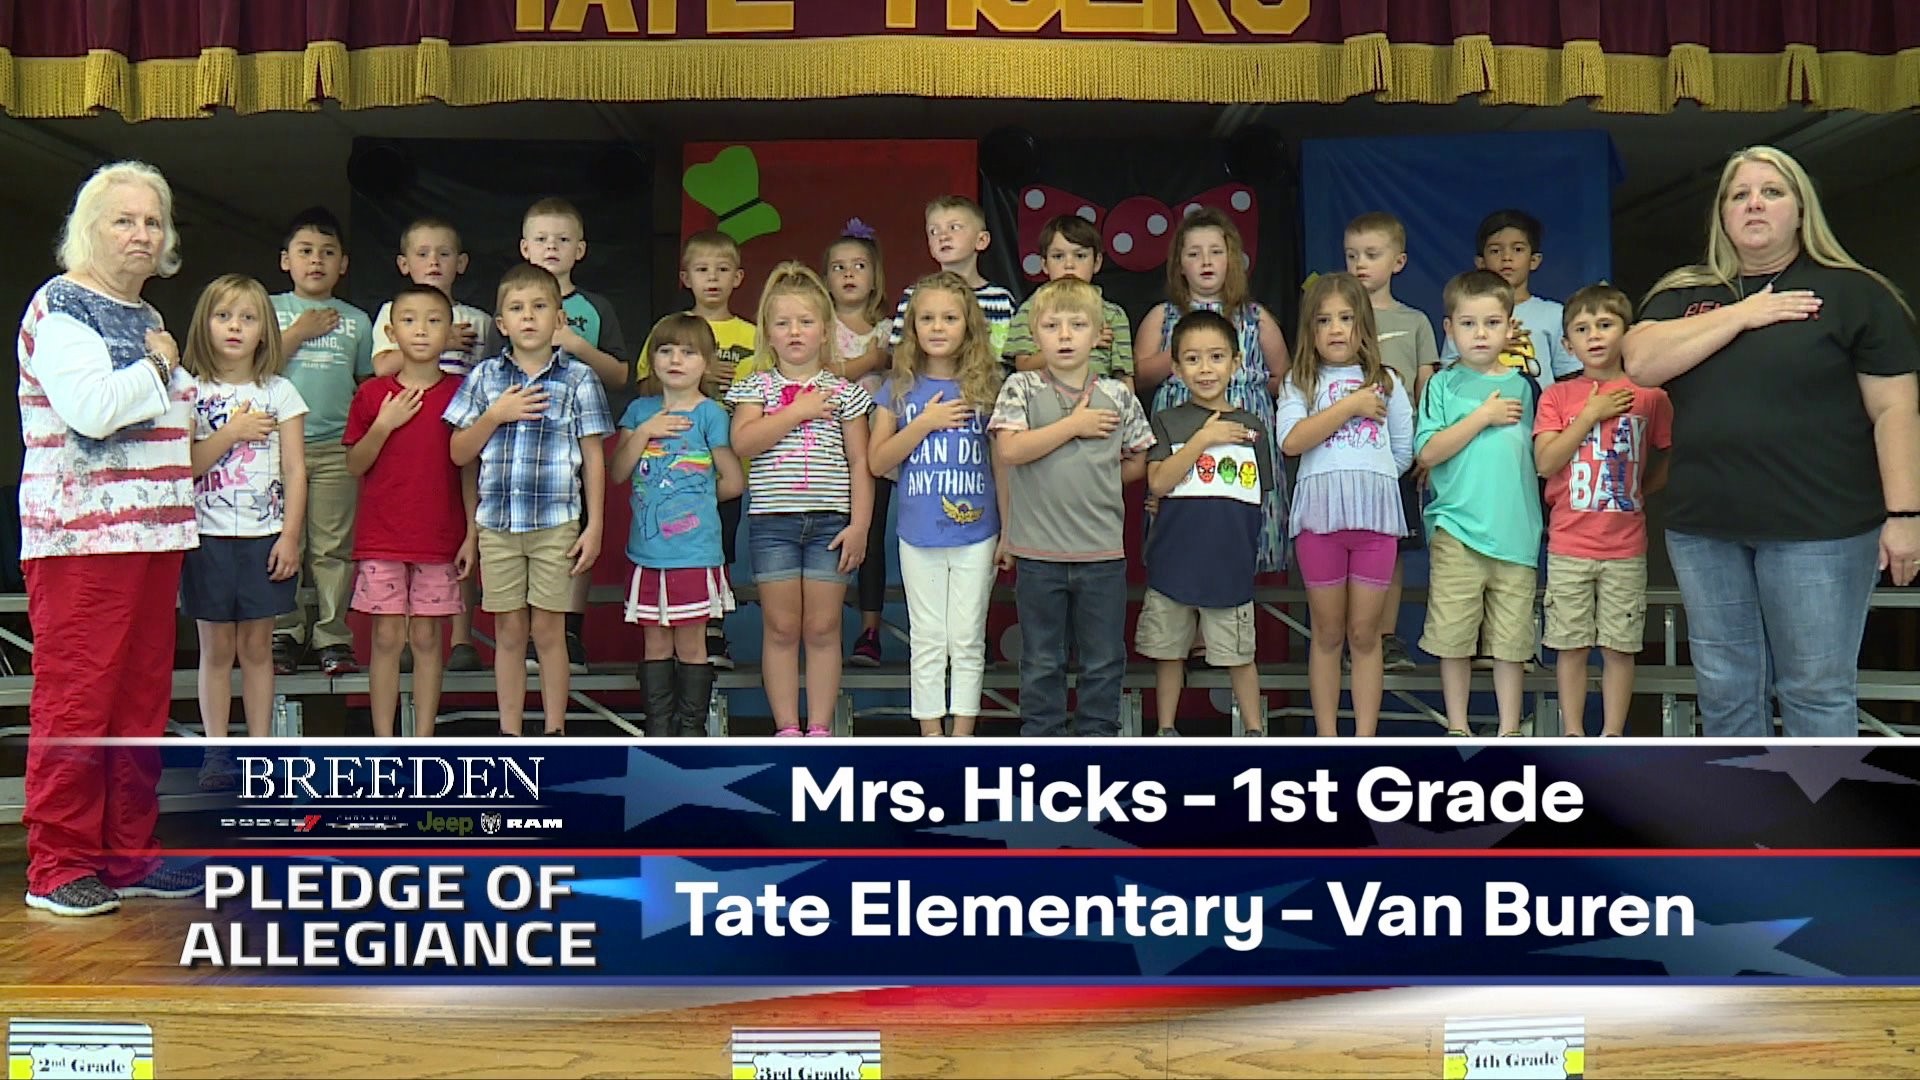 Mrs. Hicks 1st Grade Tate Elementary, Van Buren